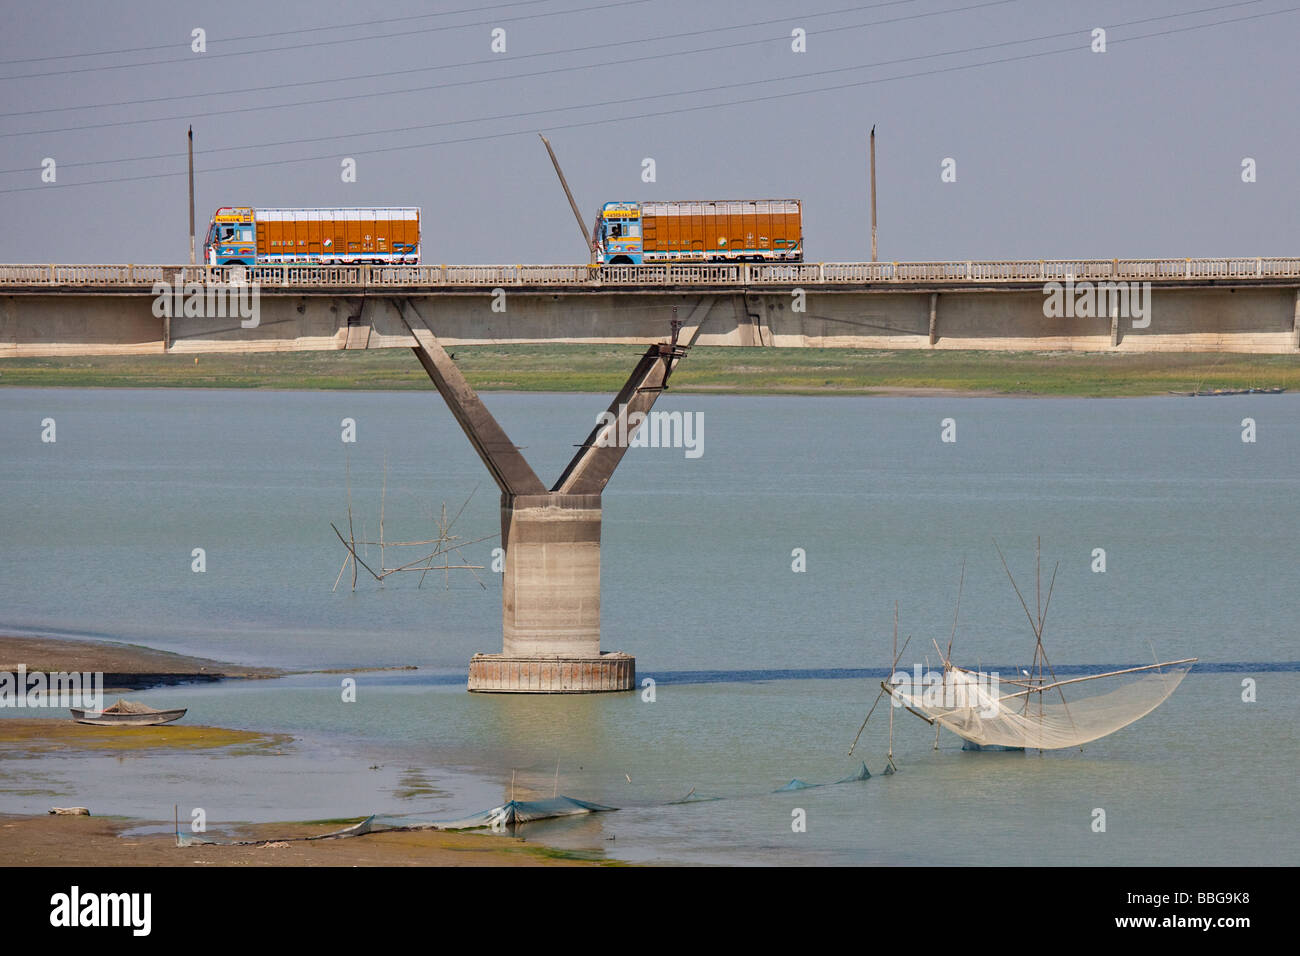 Trucks on a Bridge over a Fishing Net in the River in Rural Bihar